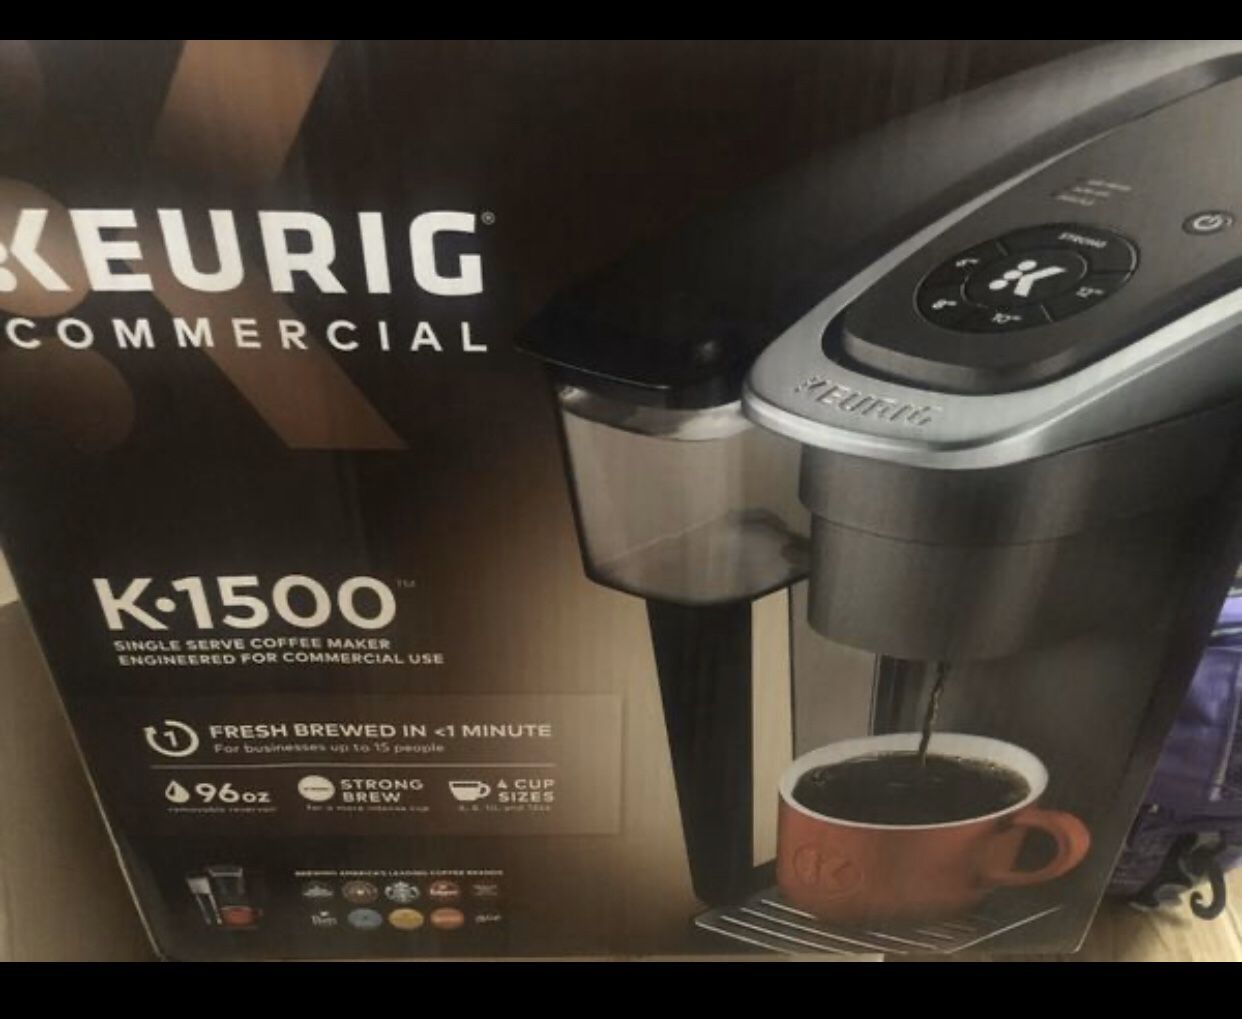 Keurig K1500 Single Serve Commercial Coffee Maker-Black